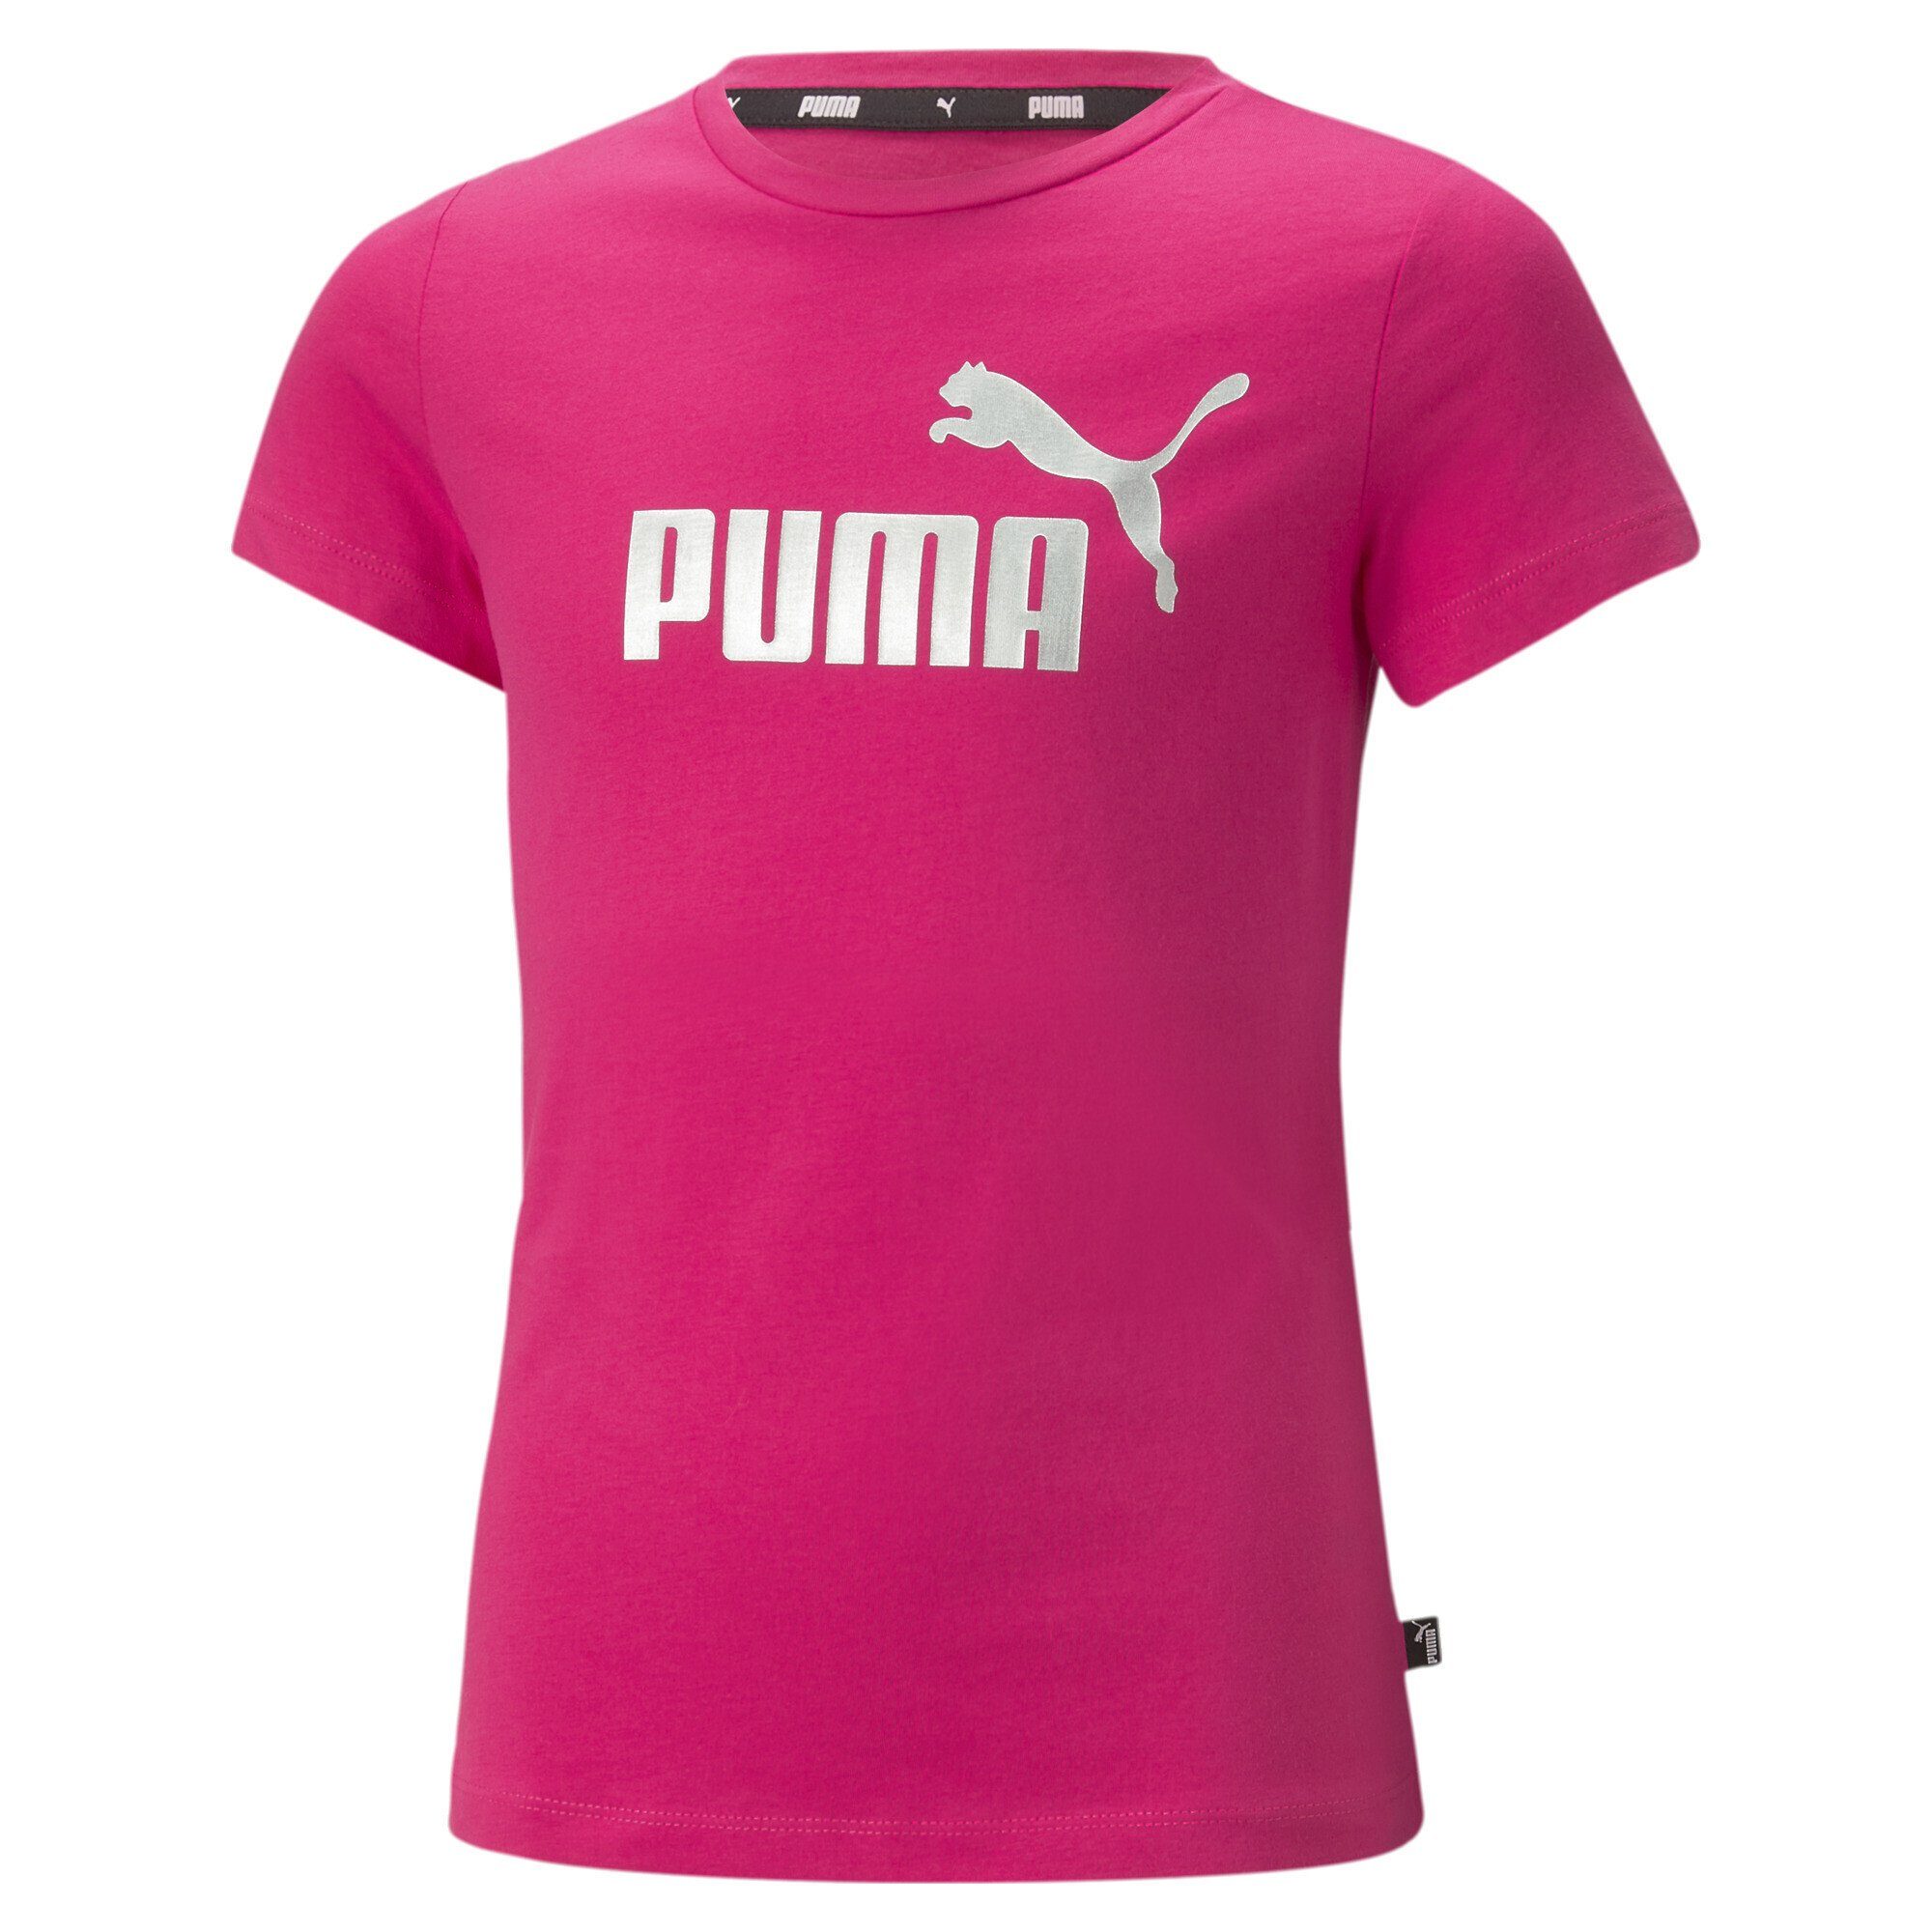 Essentials+ T-Shirt Orchid Shadow Pink Mädchen PUMA Logo T-Shirt